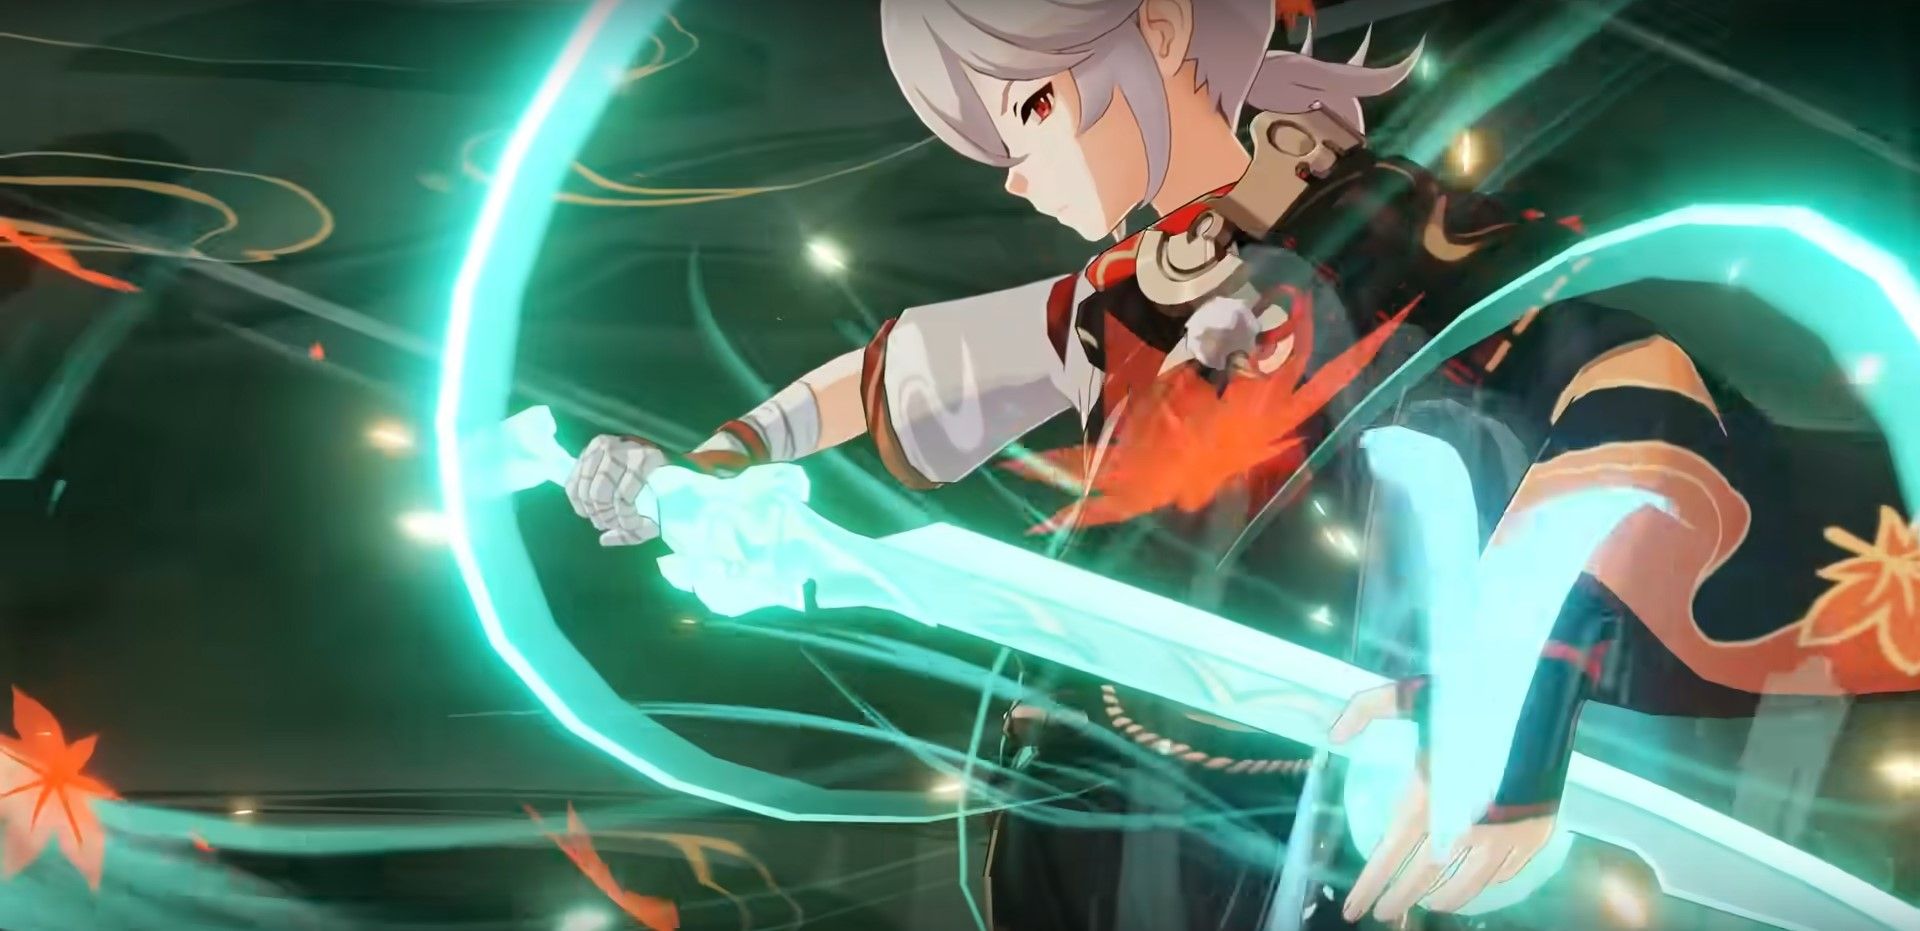 Kazuha Elemental Burst in the Gameplay trailer